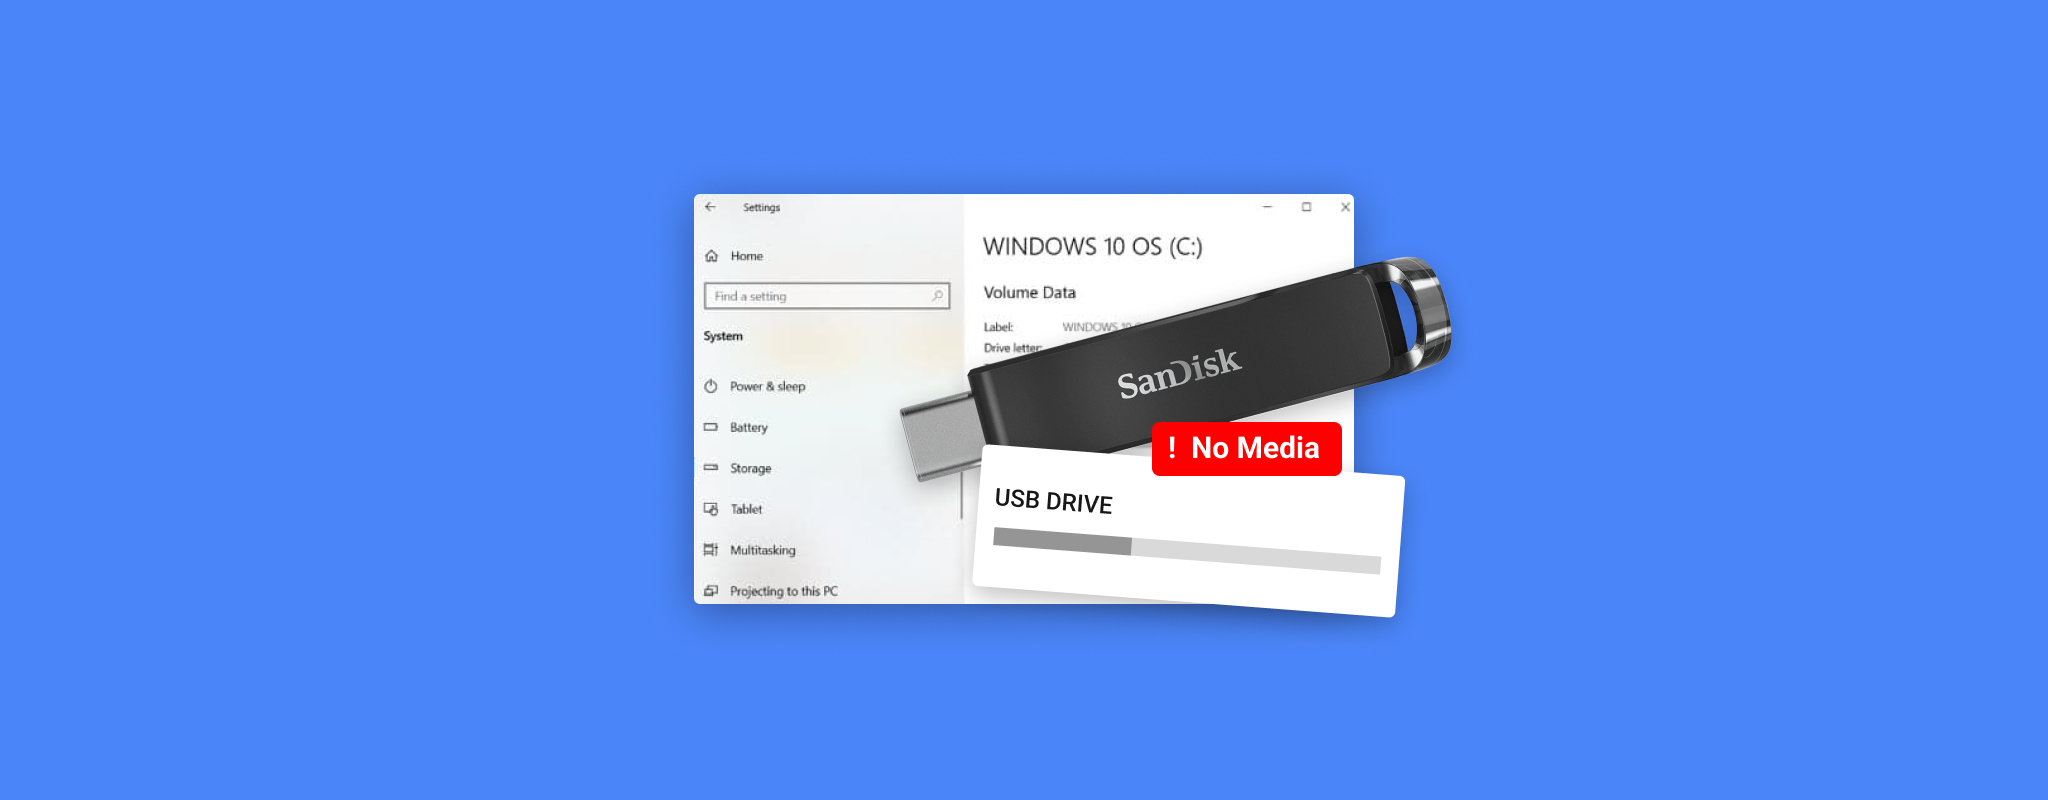 Buena suerte Abundantemente Mala fe USB Drive Shows "No Media" in Disk Management: 6 Ways to Fix